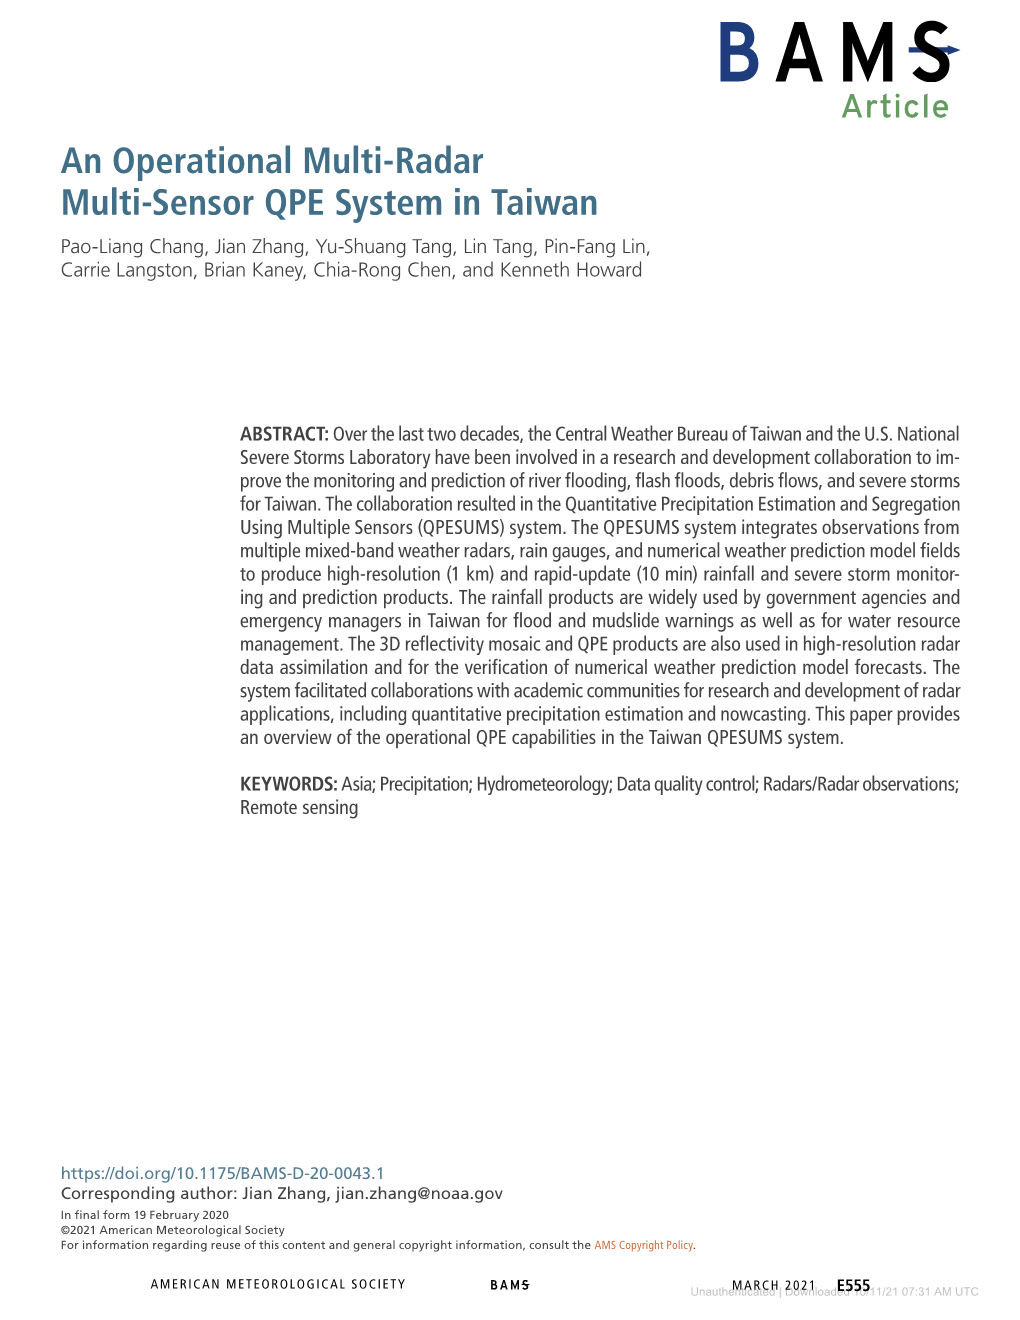 An Operational Multi-Radar Multi-Sensor QPE System in Taiwan